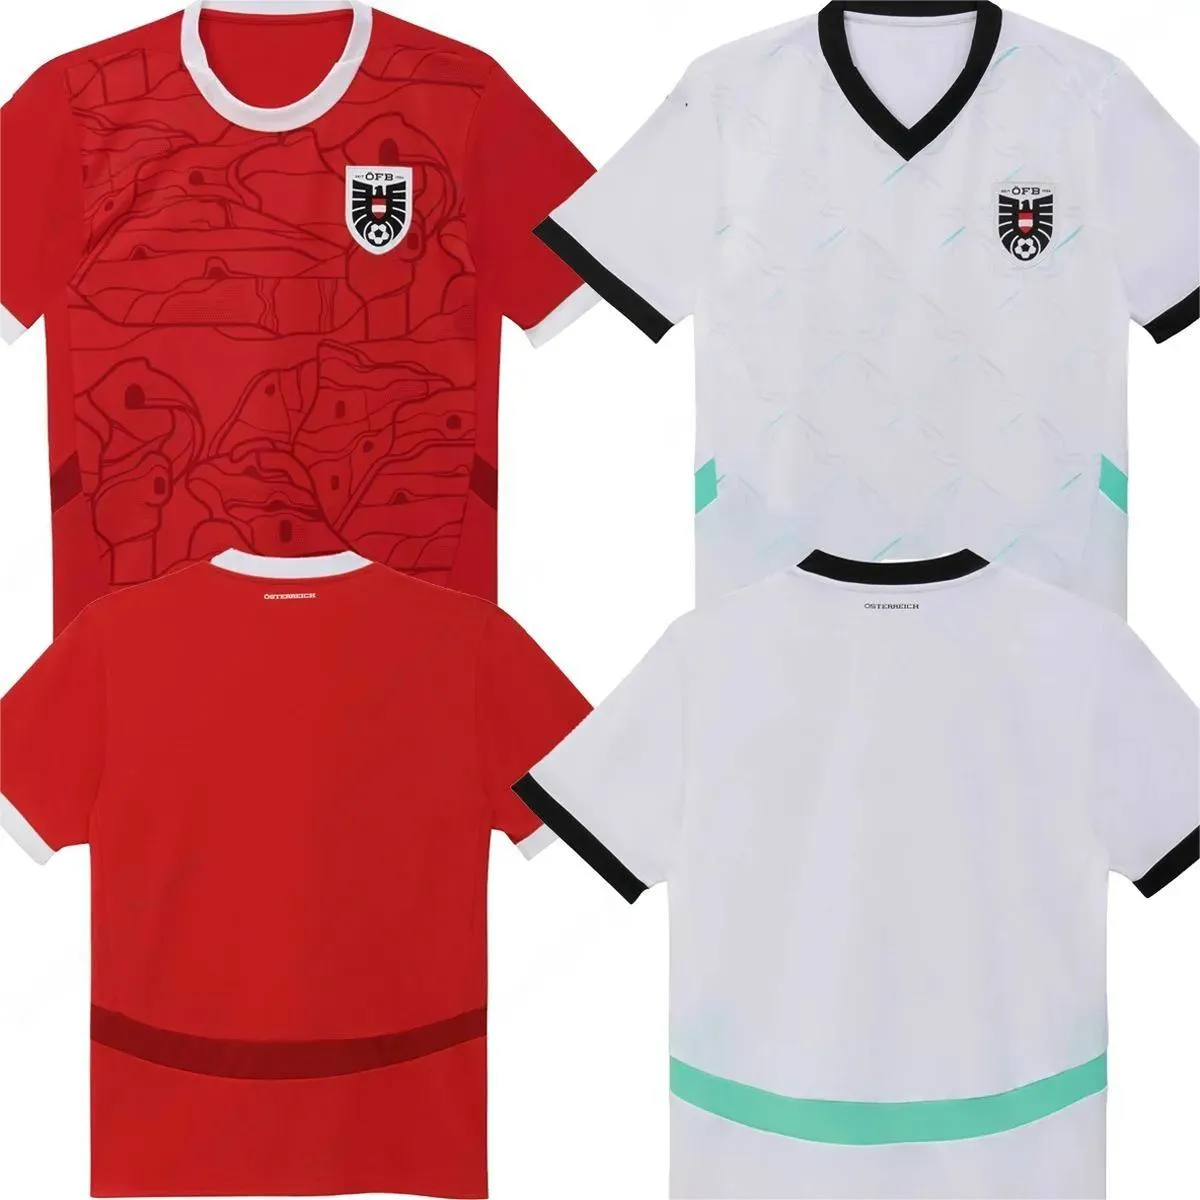 2024 Austria Euro t shirt Soccer Jerseys Home Away Austria national football team Kits men tops tee shirts uniforms sets red tops white tees